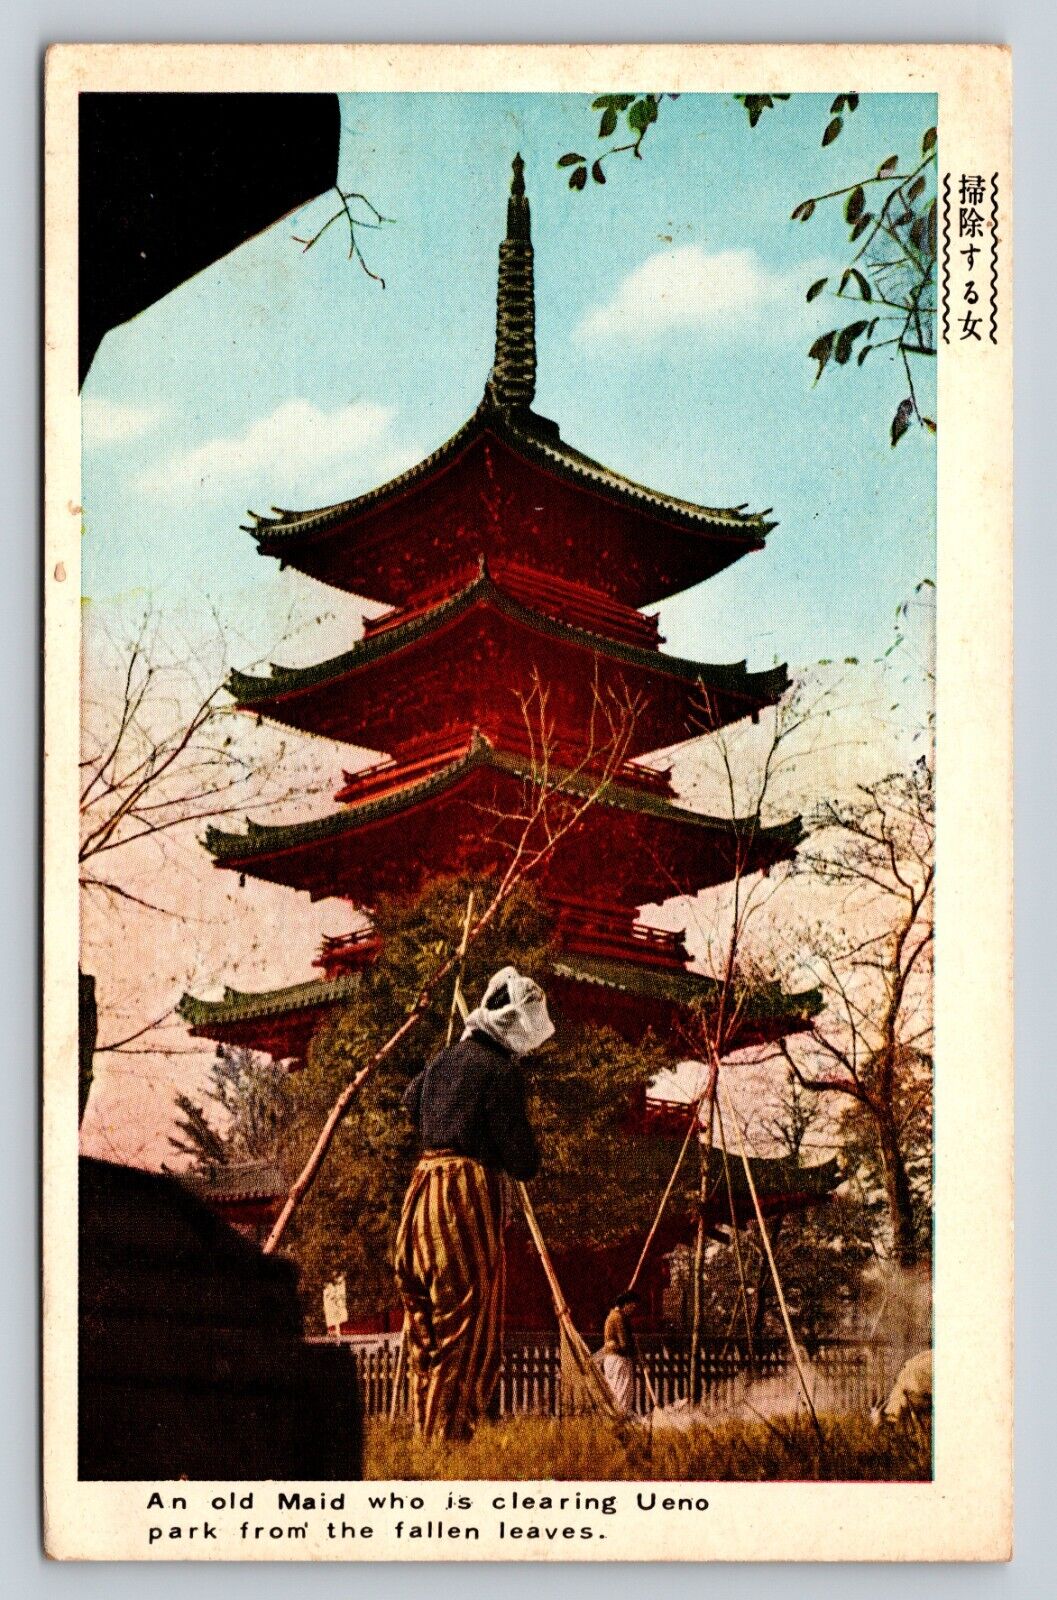 Ueno Park Tokyo Japan Old Maid Clearing Fallen Leaves VINTAGE Postcard